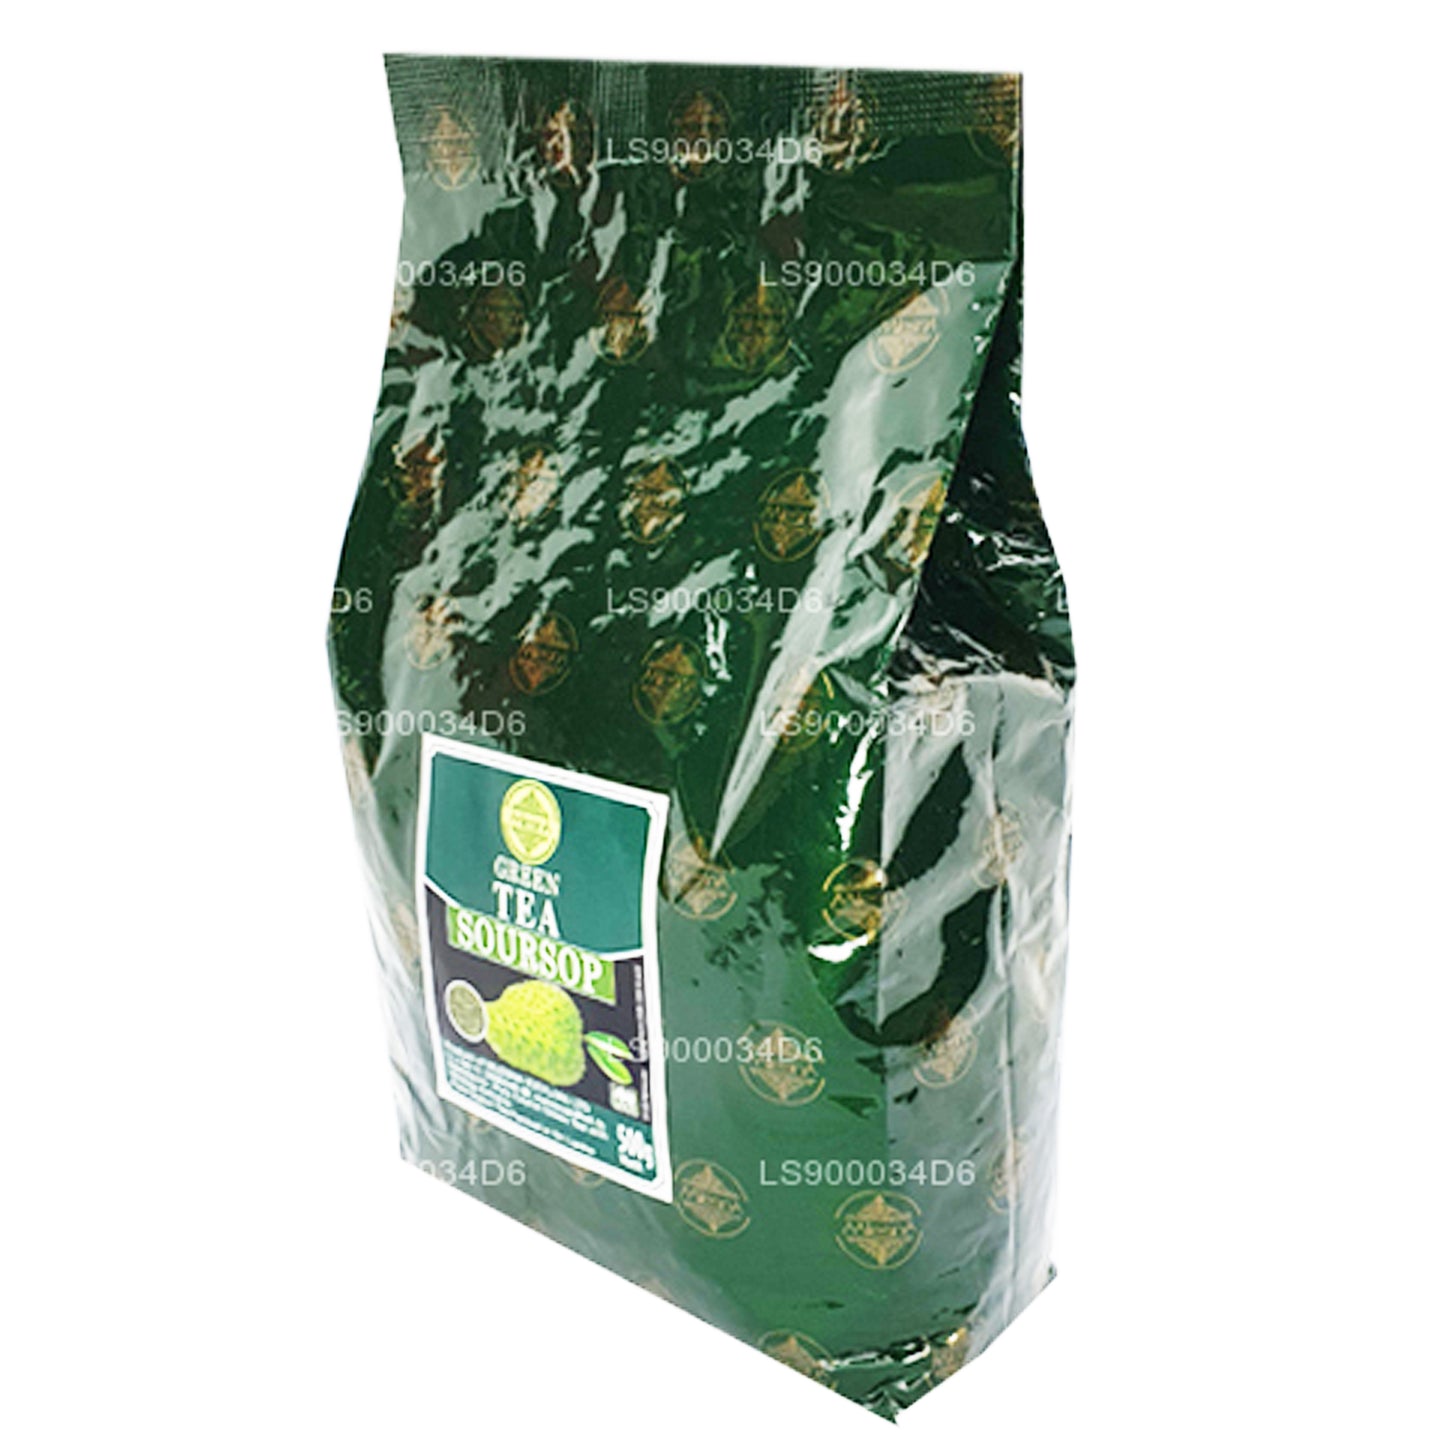 Mlesna Natural Flavored Soursop Ceylon Green Tea (500g)